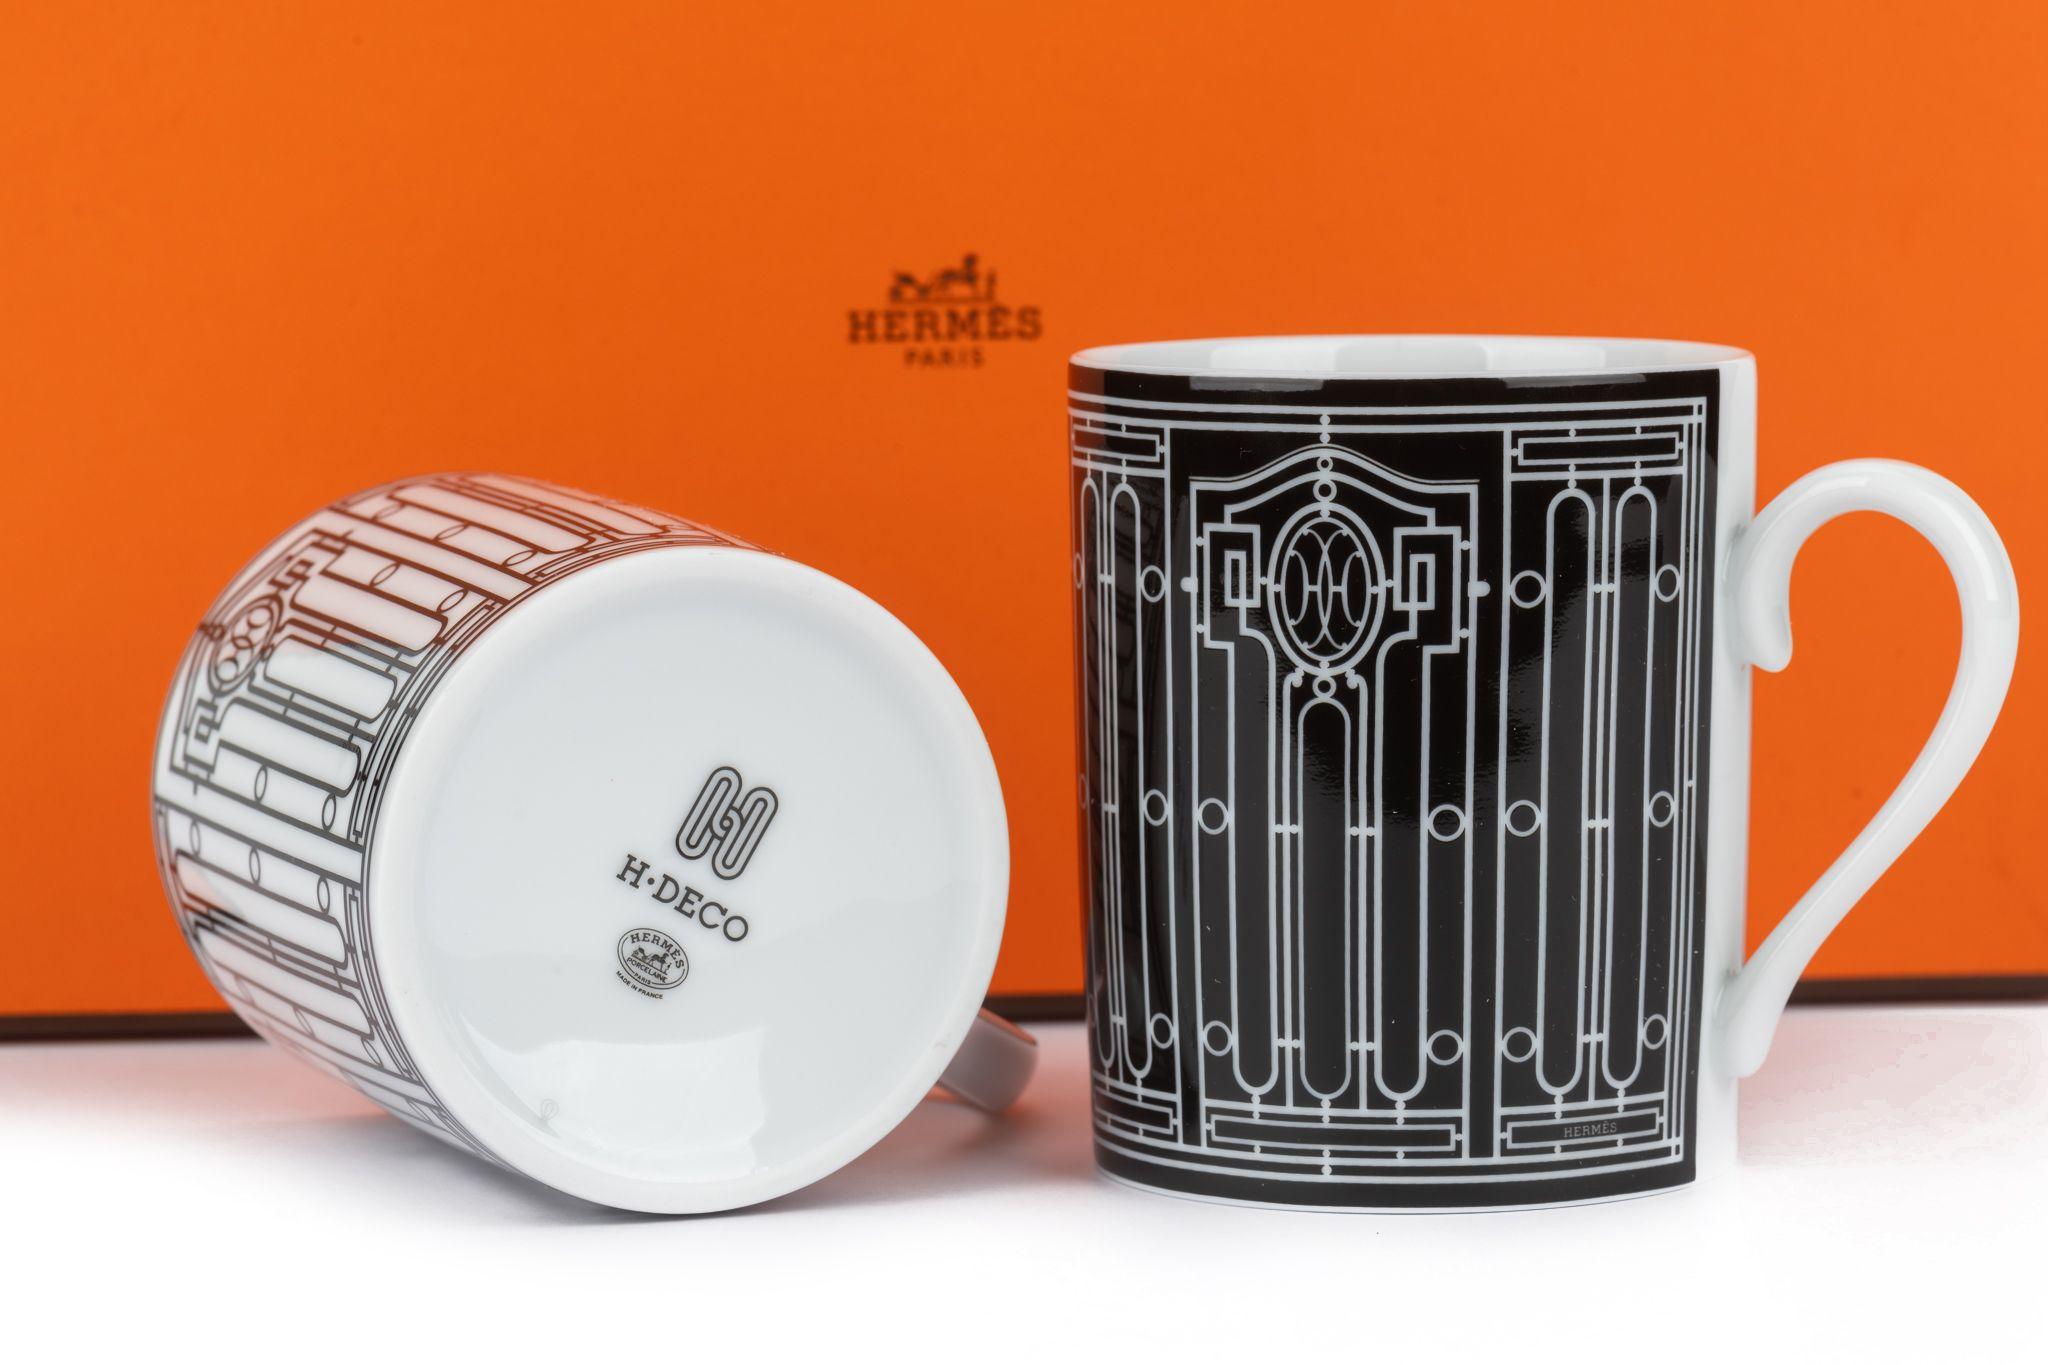 Hermès brand new set of 2 coffee mugs, black and white art deco design made of porcelain. 
Come with original box and booklet.